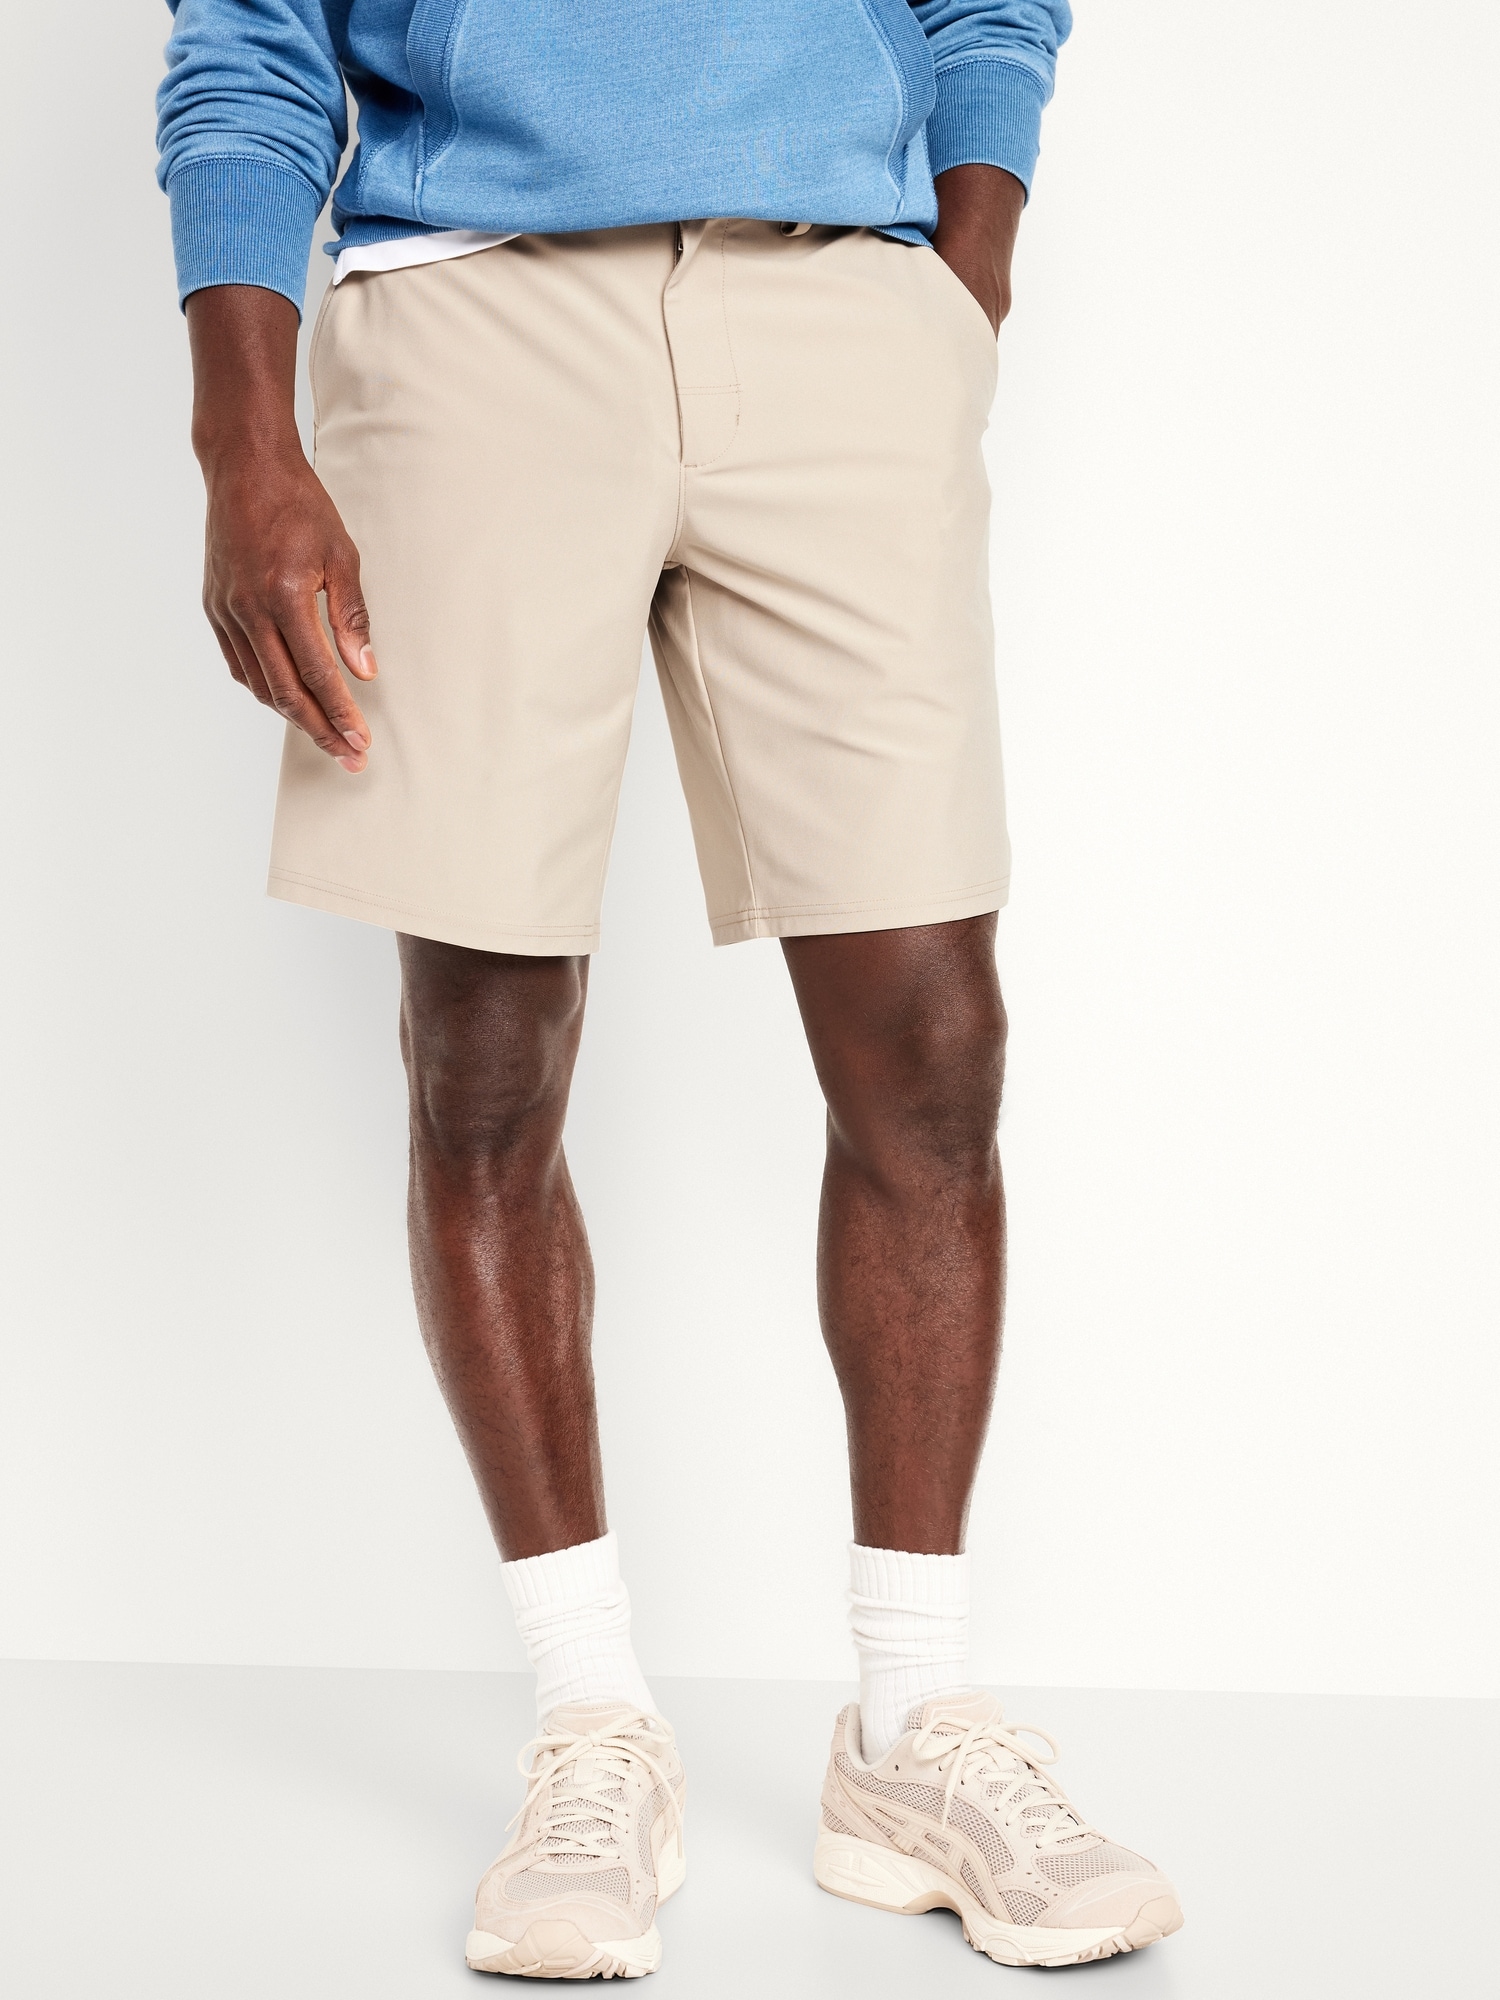 Hybrid Tech Chino Shorts - 10-inch inseam